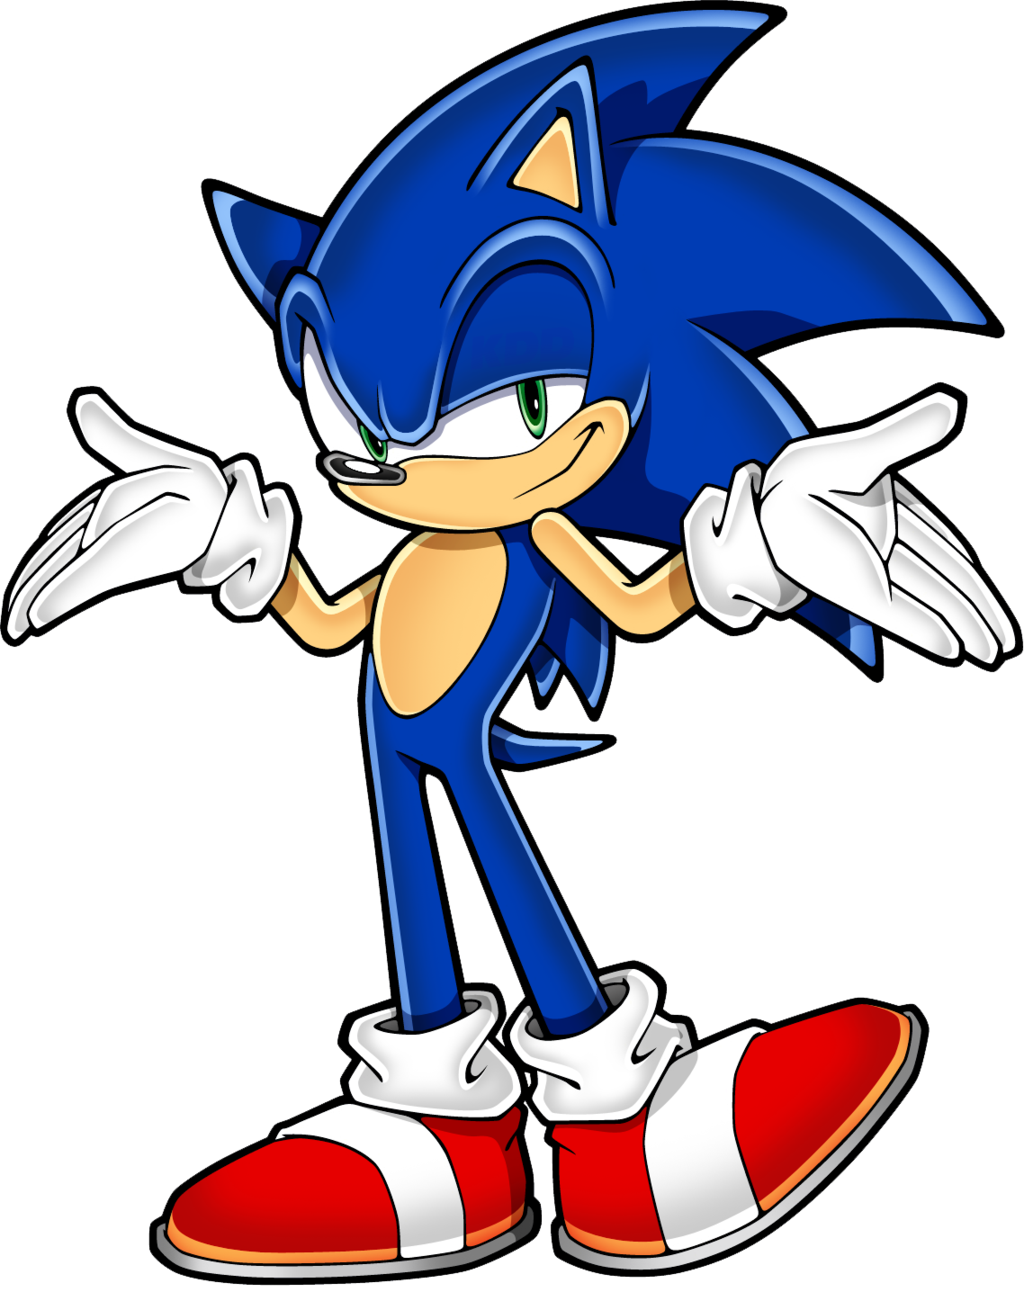 Free download Sonic shrugging Sonic the Hedgehog Know Your Meme [1024x1301] for your Desktop, Mobile & Tablet. Explore Shrug Wallpaper. Shrug Wallpaper